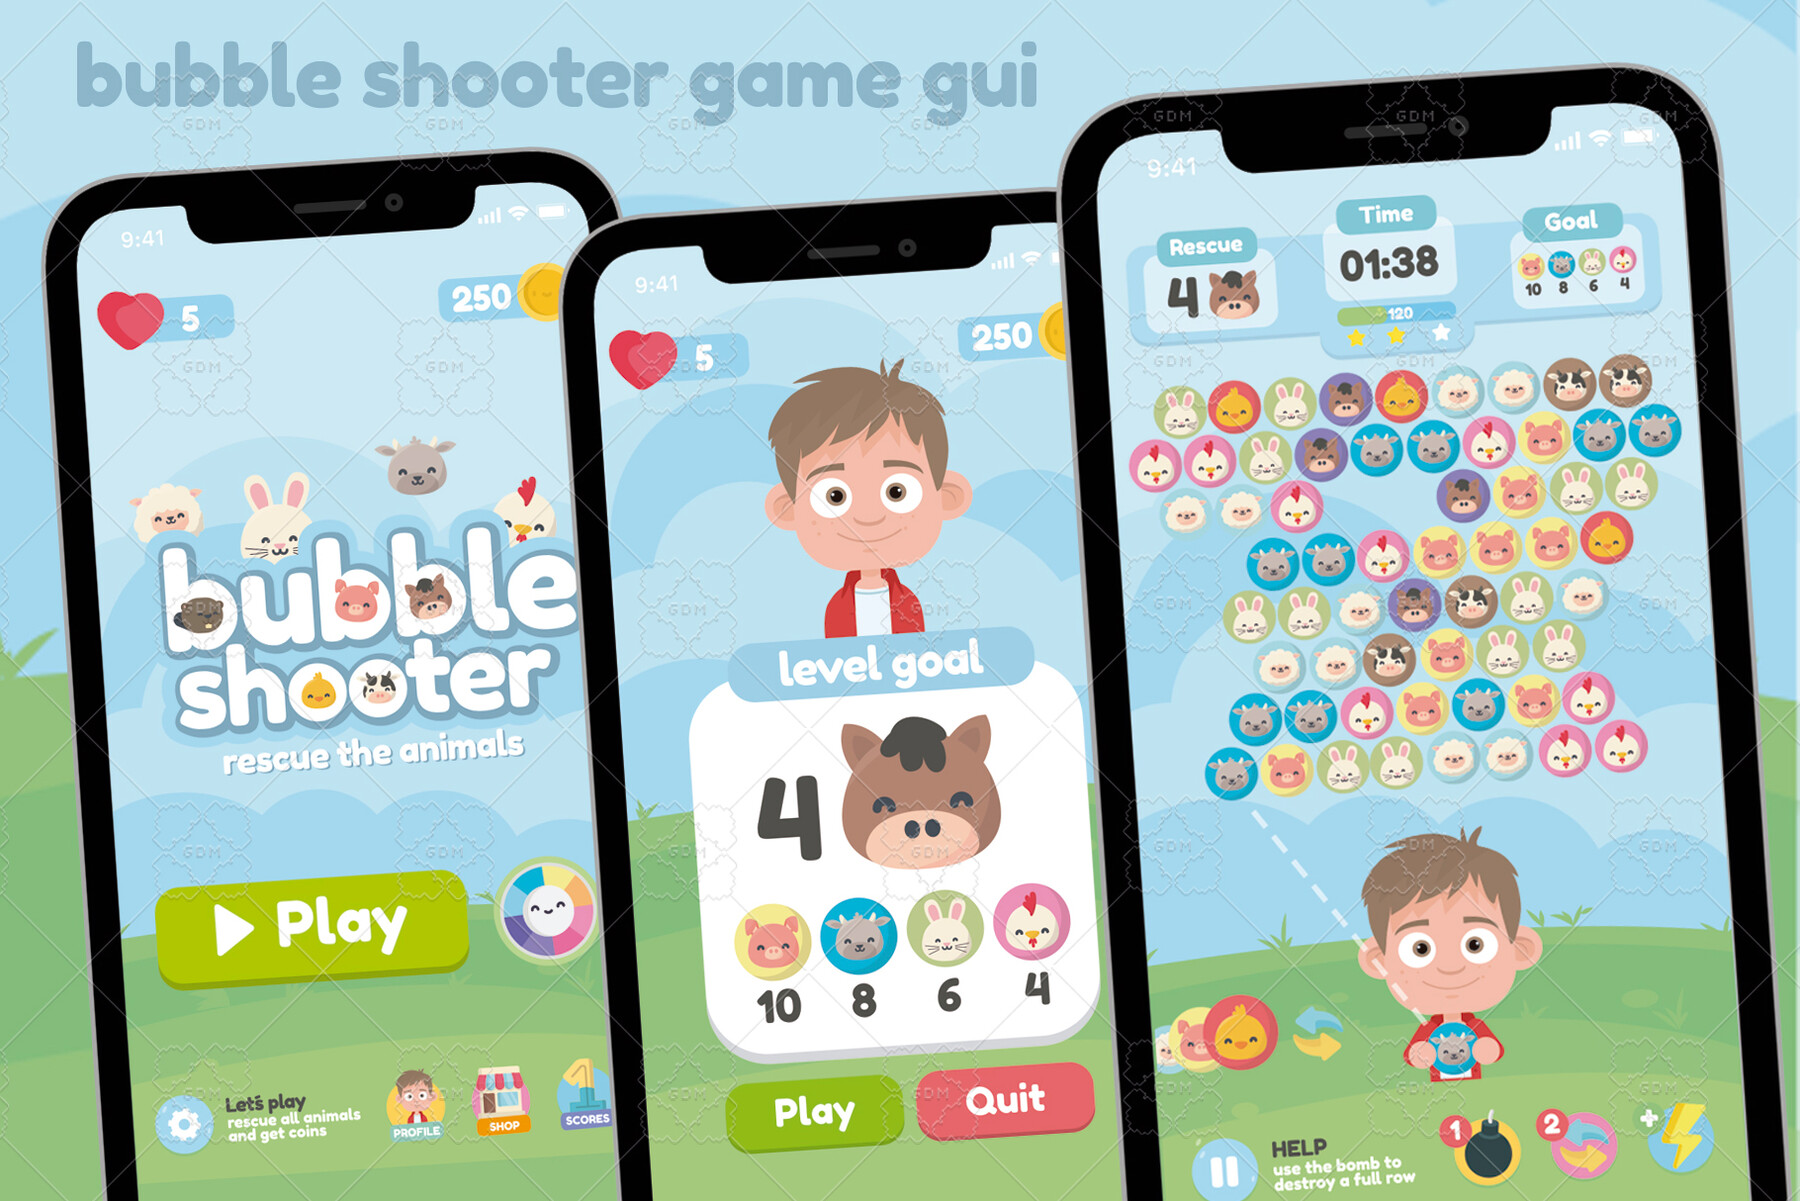 2D Bubble Shooter Match 3 Pack